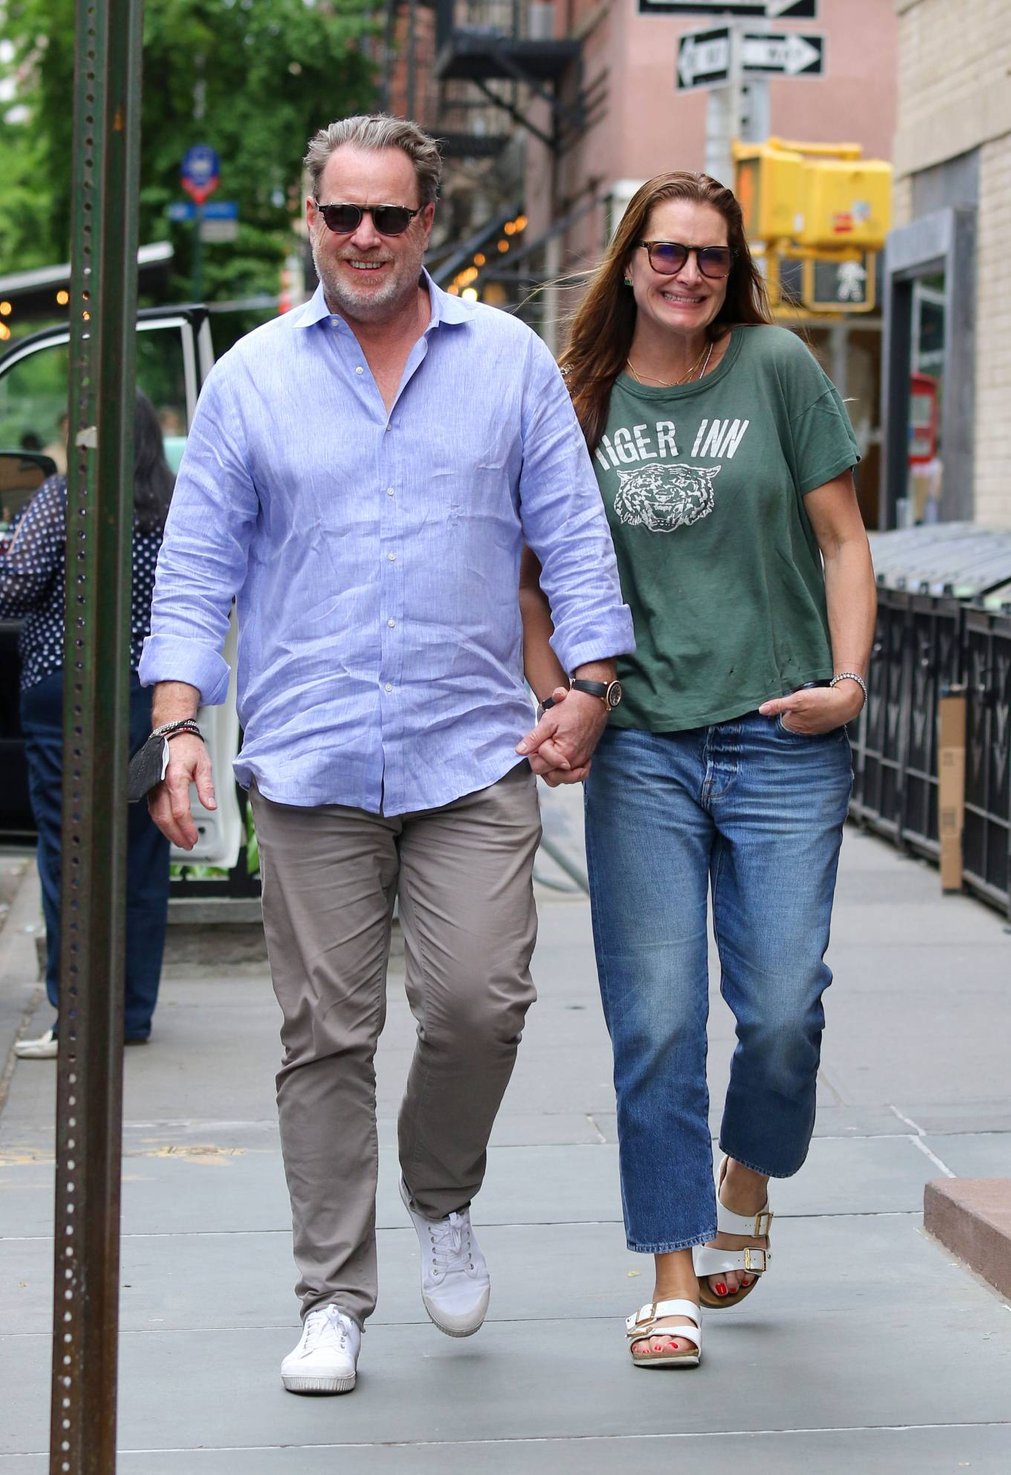 Brooke Shields 2021 : Brooke Shields – With husband Chris Henchy seen during stroll around Manhattans West Village area-14